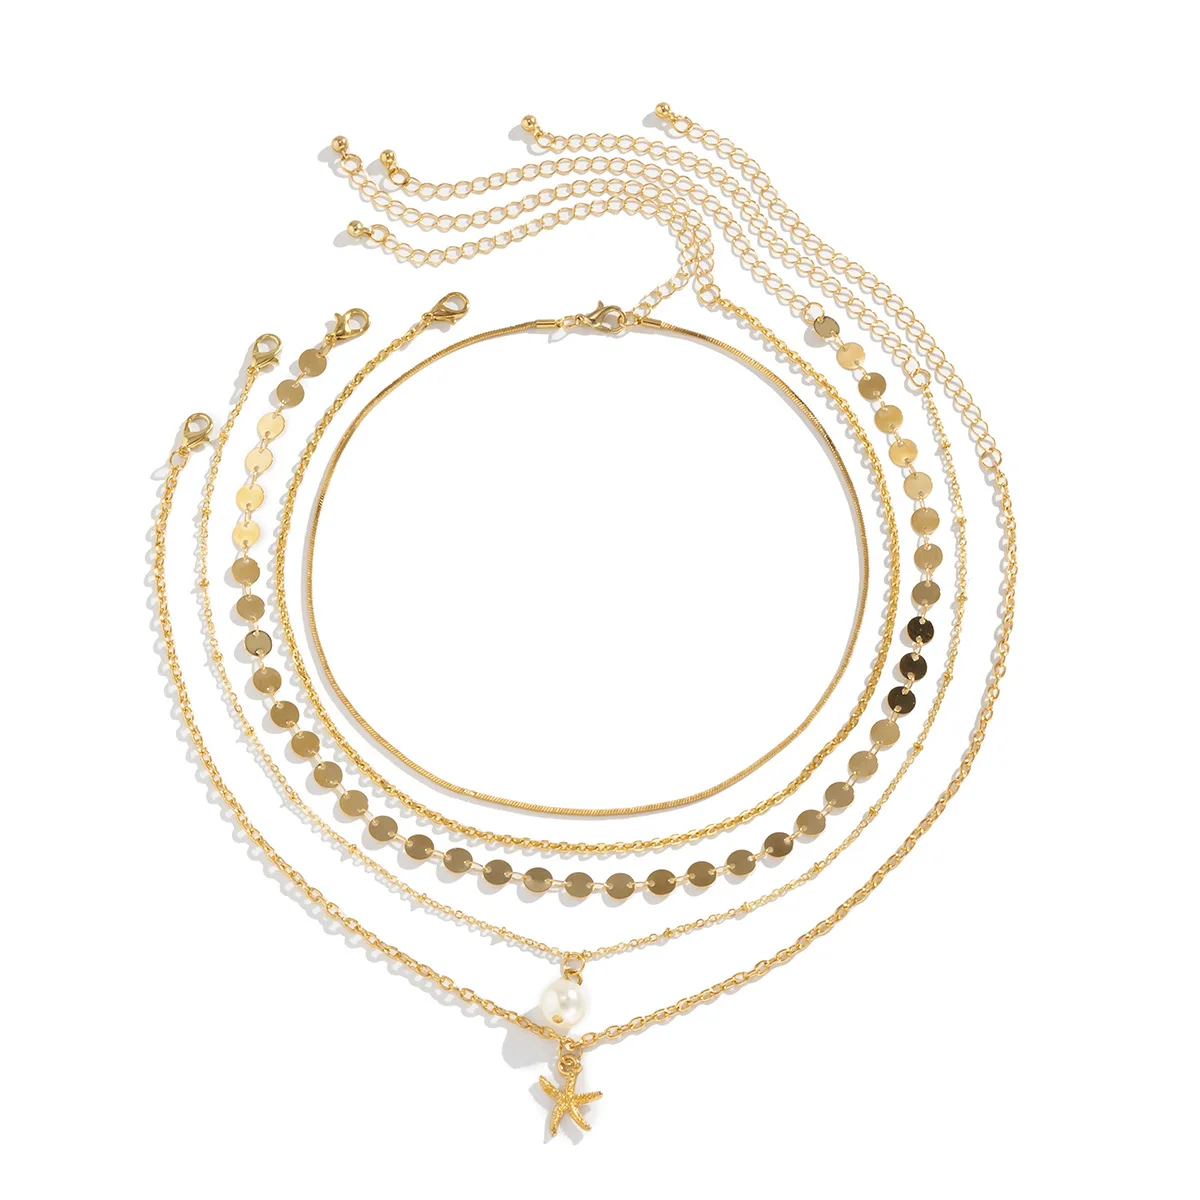 Beach ocean style sequin necklace pearl starfish pendant jewelry set minimalist jewelry women accessories